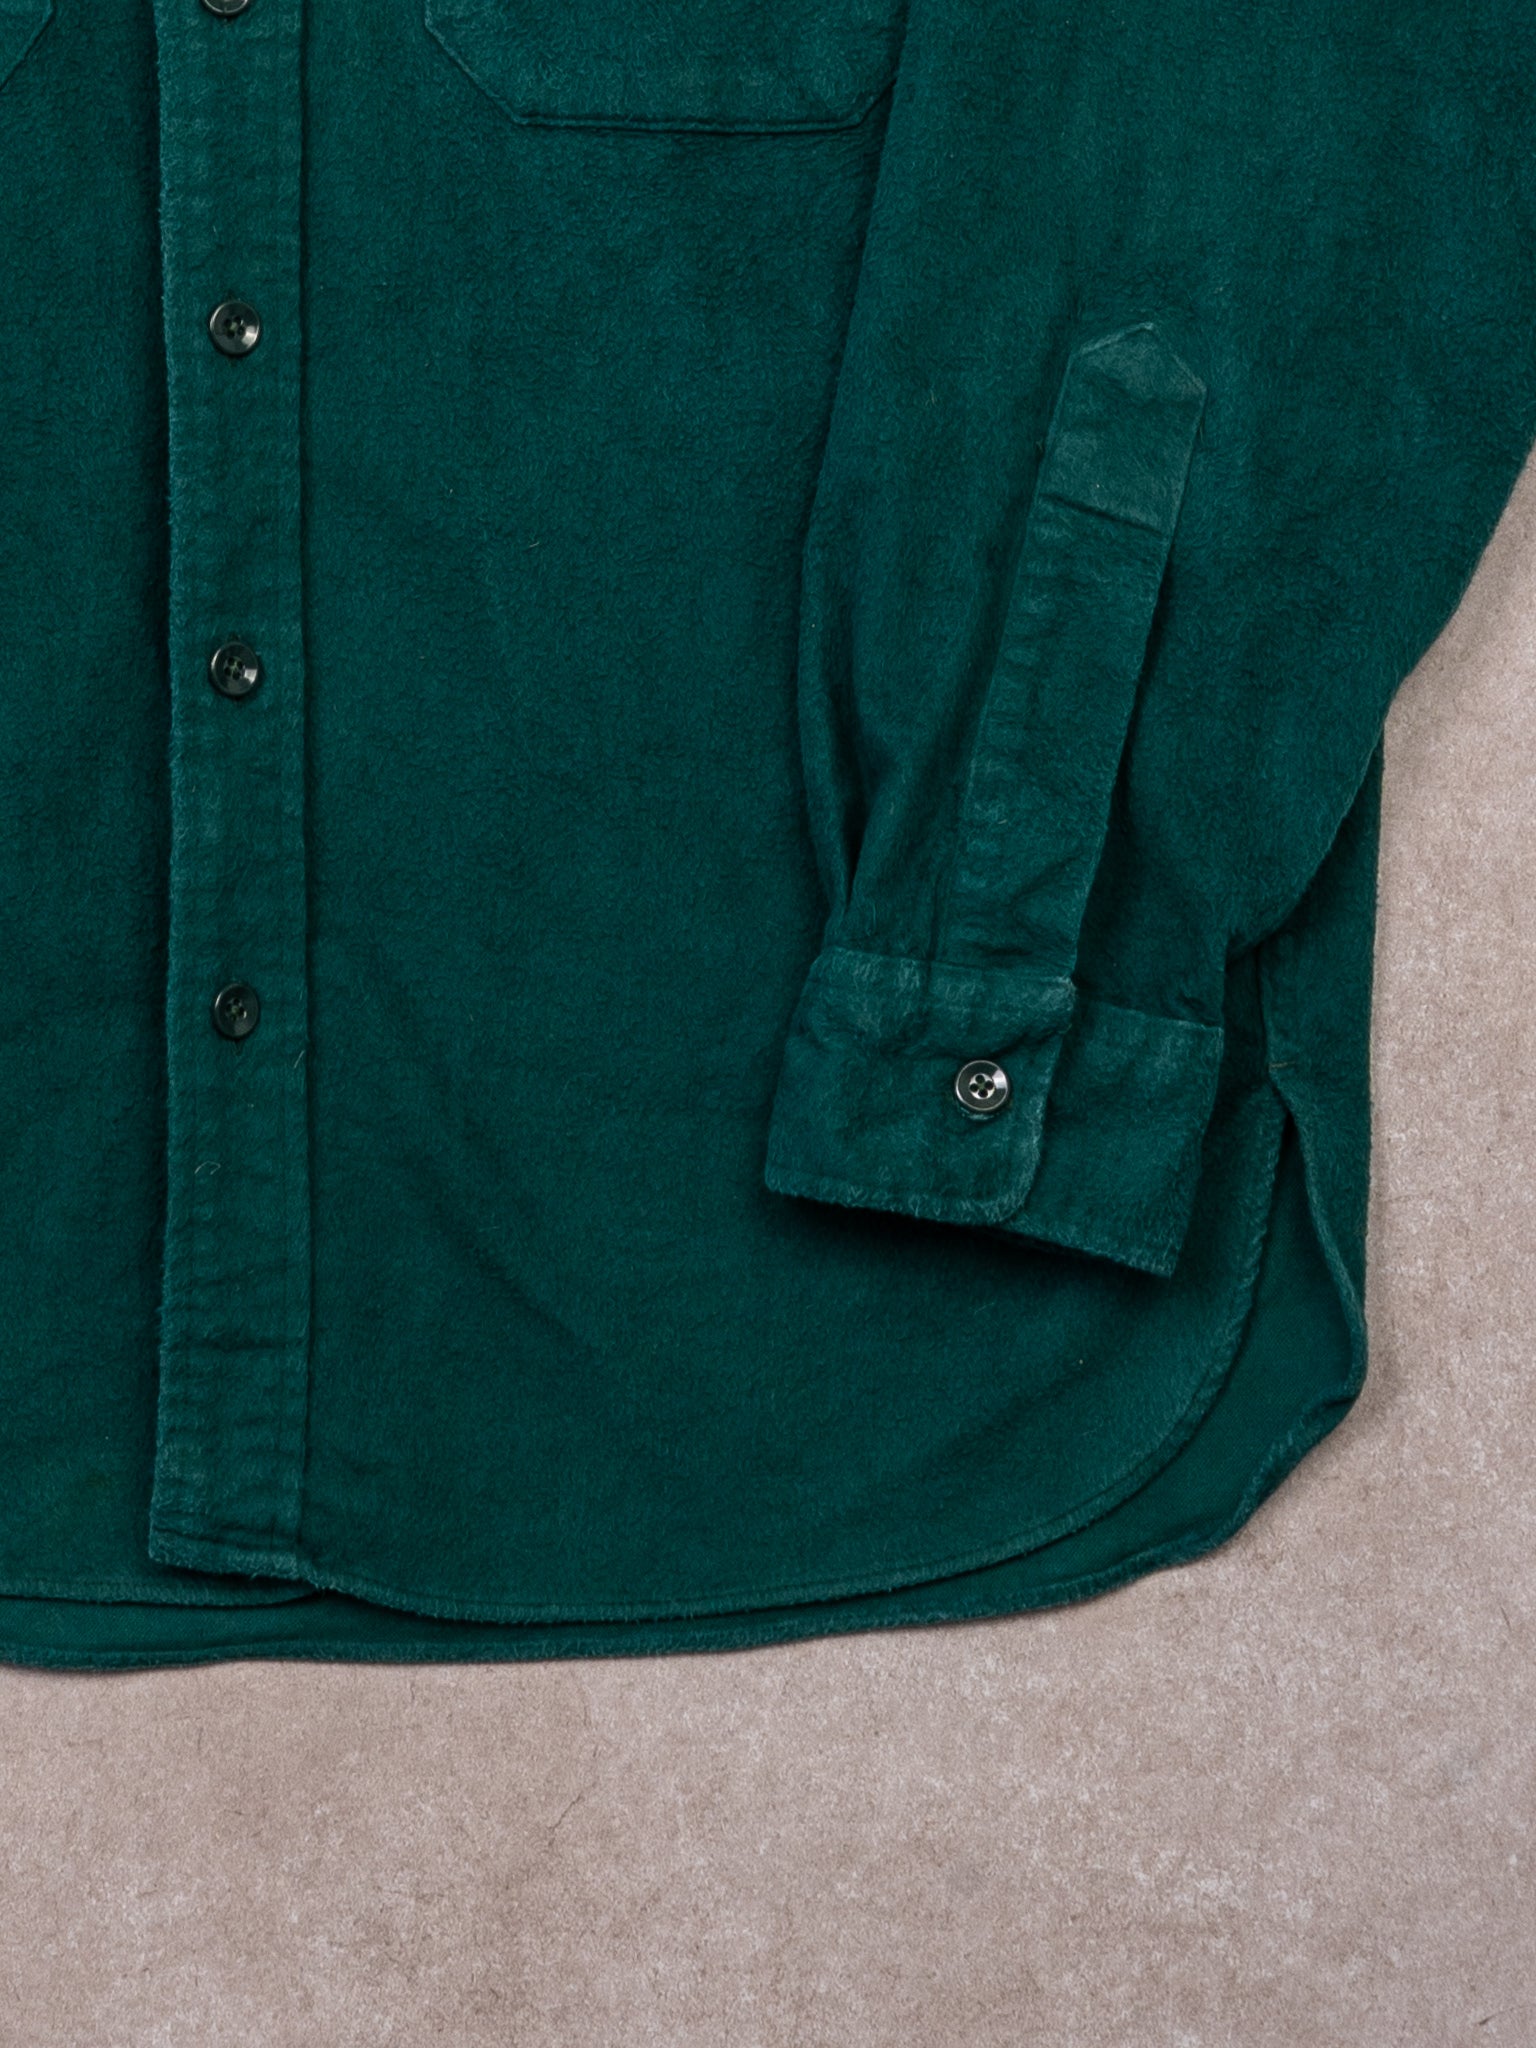 Vintage 90s Green LL Bean Cotton Button Up (M/L)